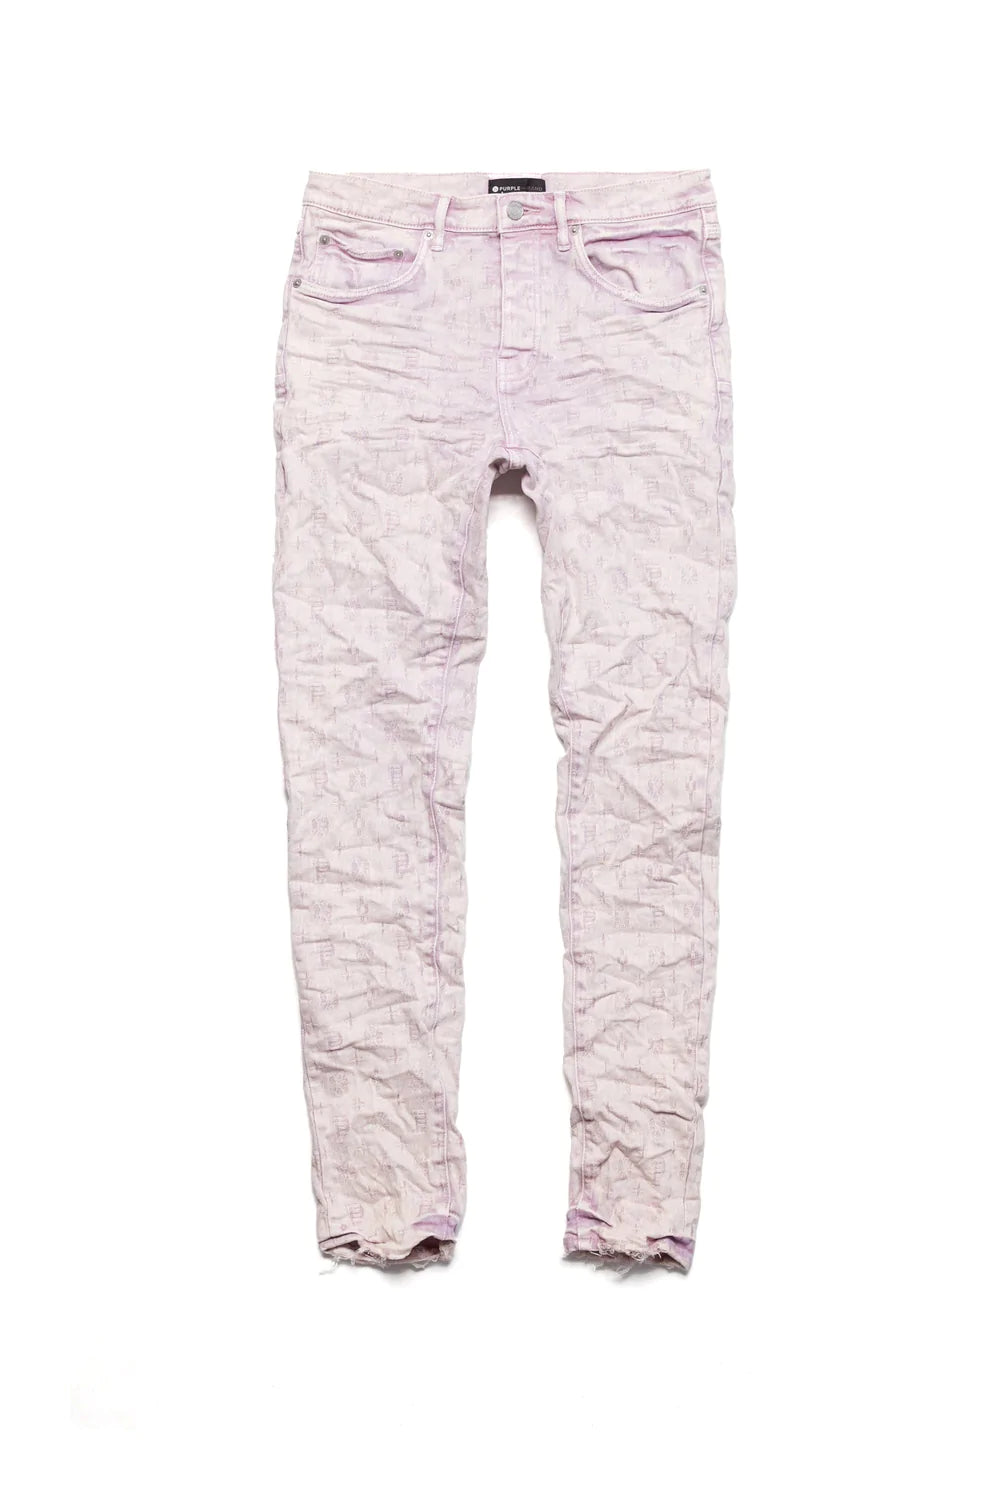 Purple Brand P001-LVJM322 Purple Brand Jeans P001 Low Rise Skinny Lavender Jacquard Monogram Pink / 30